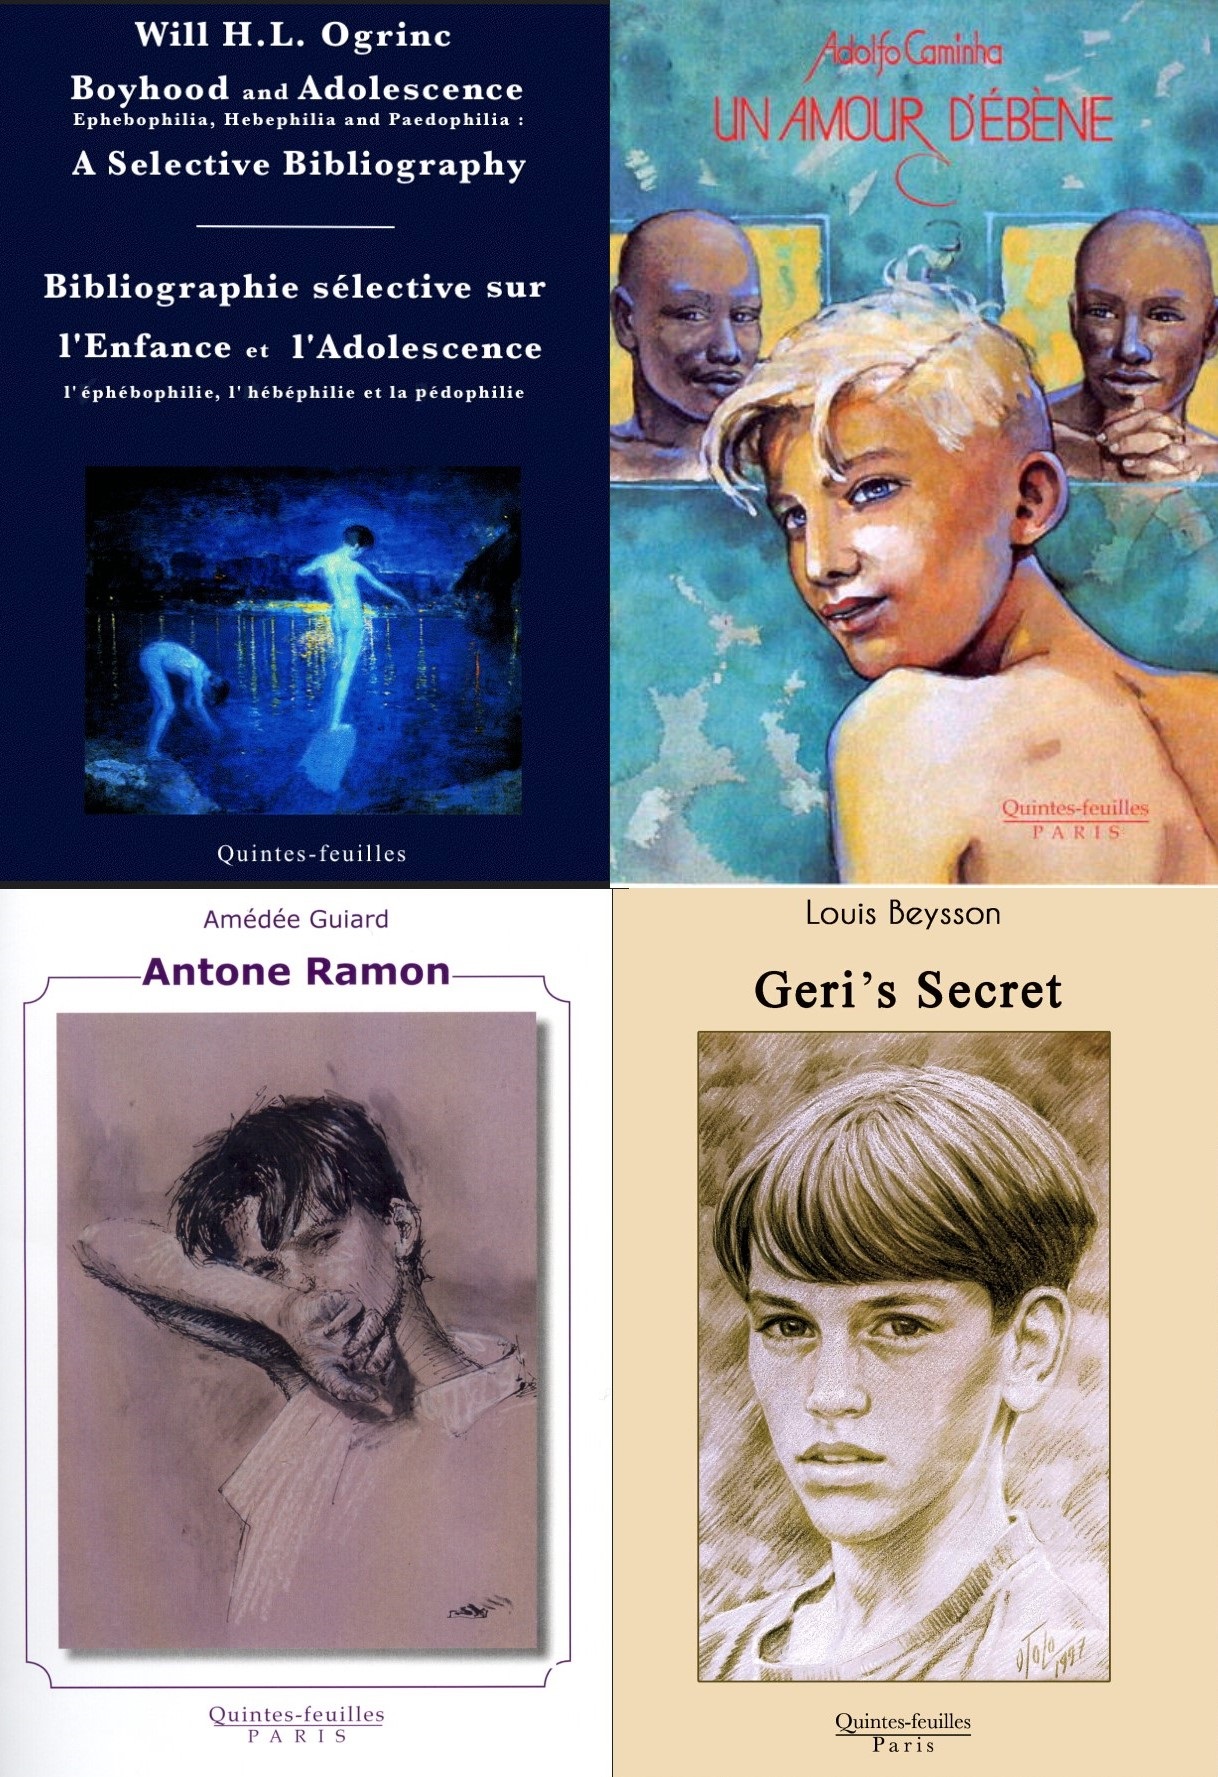 Feray Jean Claude. Book covers